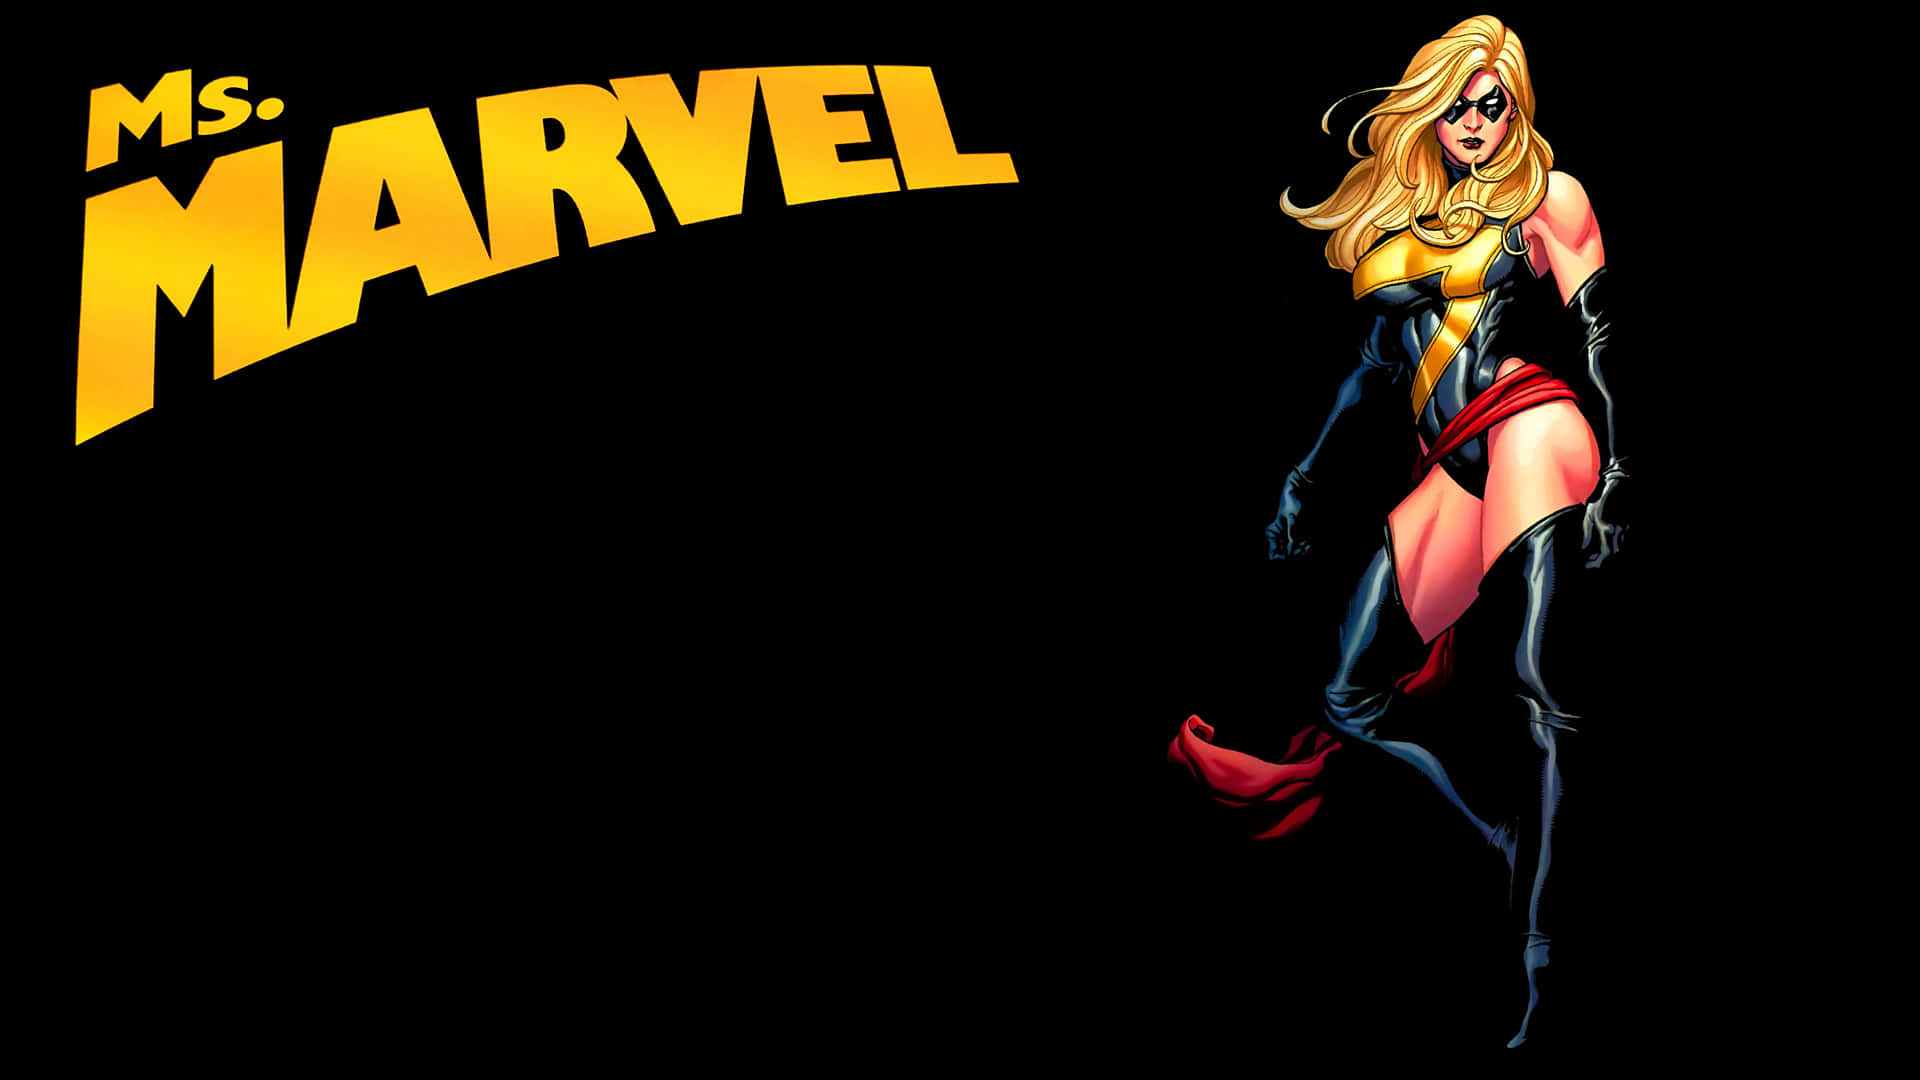 Lacarol Danvers Di Marvel, A.k.a. Captain Marvel.